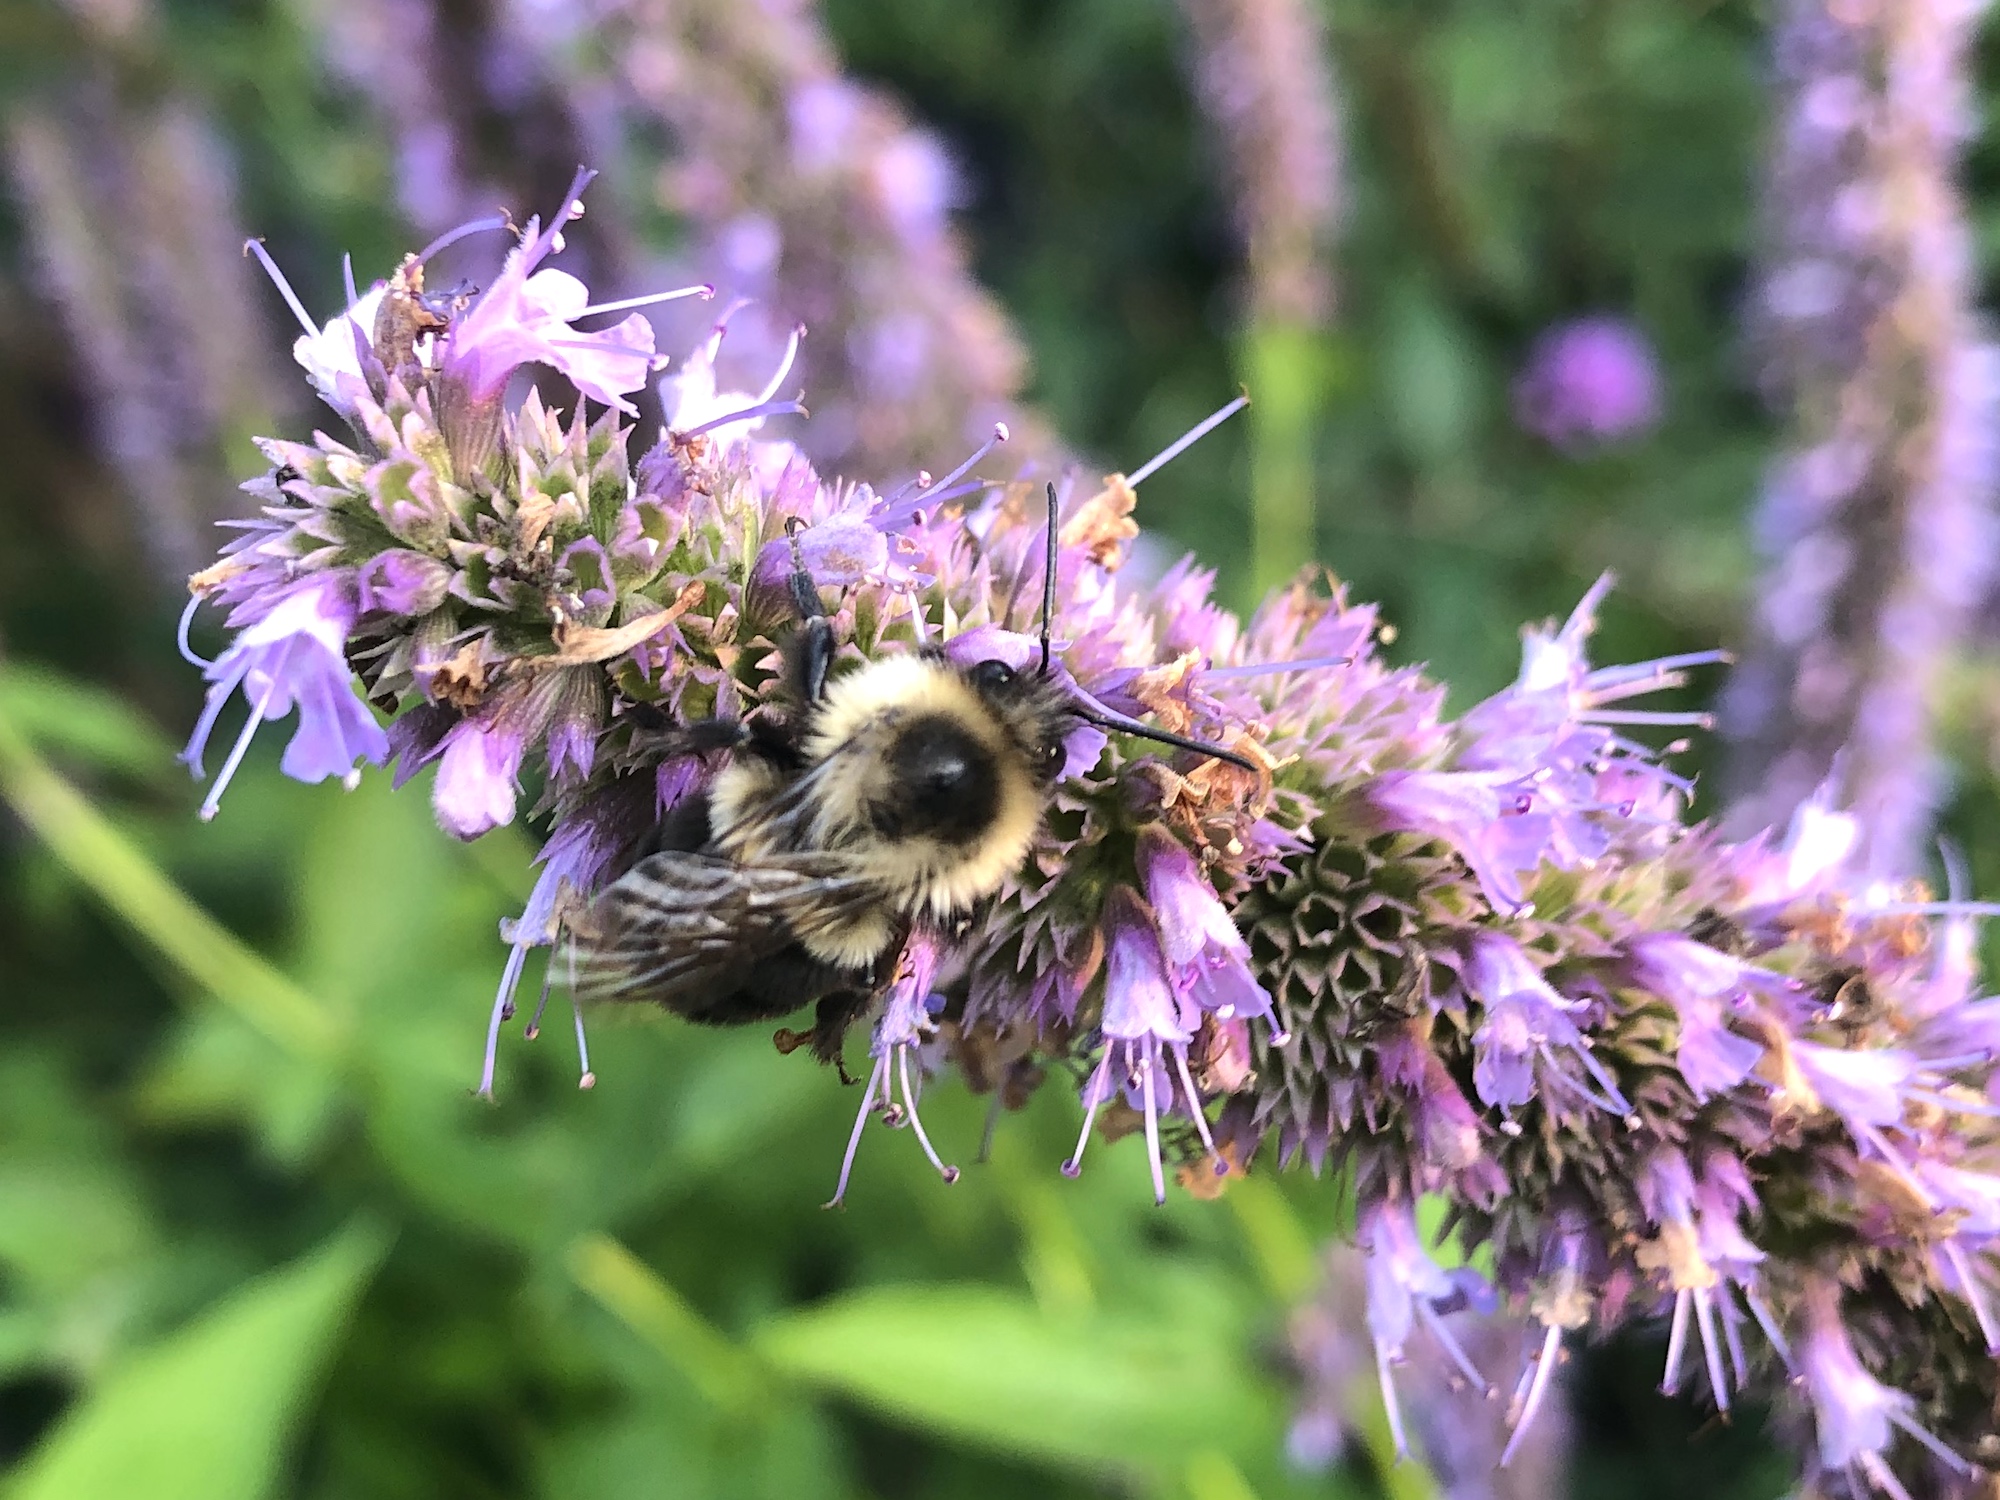 Bumblebee on Hyssop on September 16, 2020.